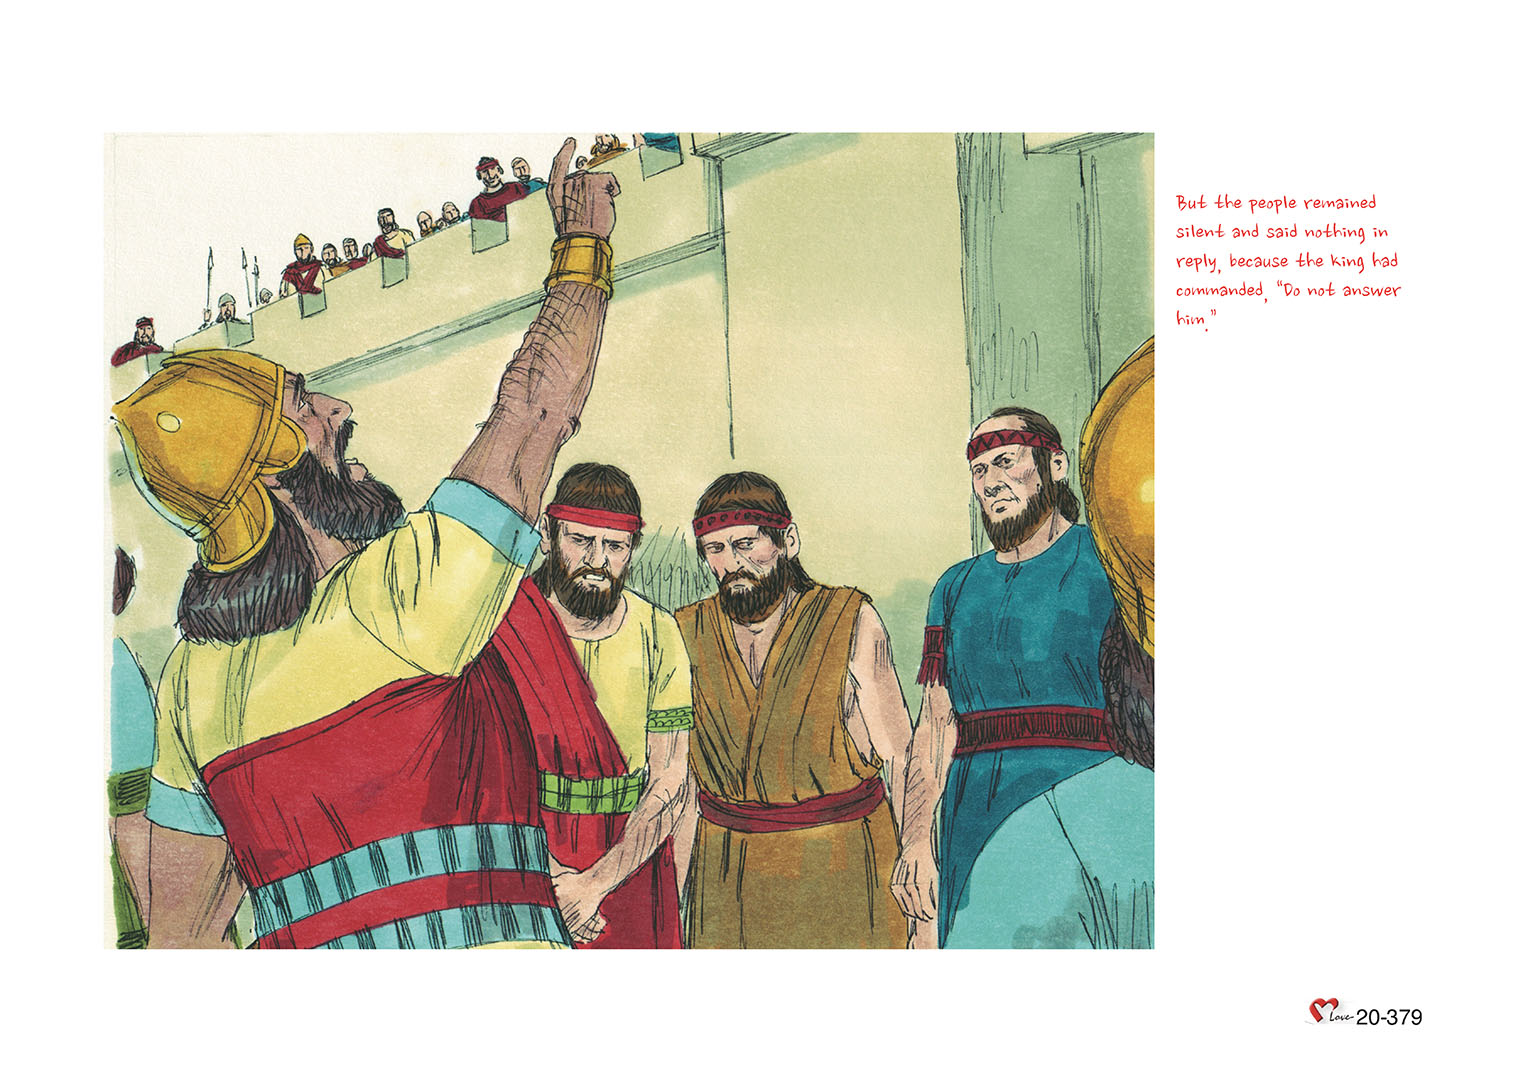 Chapter 20 - Lesson 64 - Kings of Southern Kingdom- Hezekiah